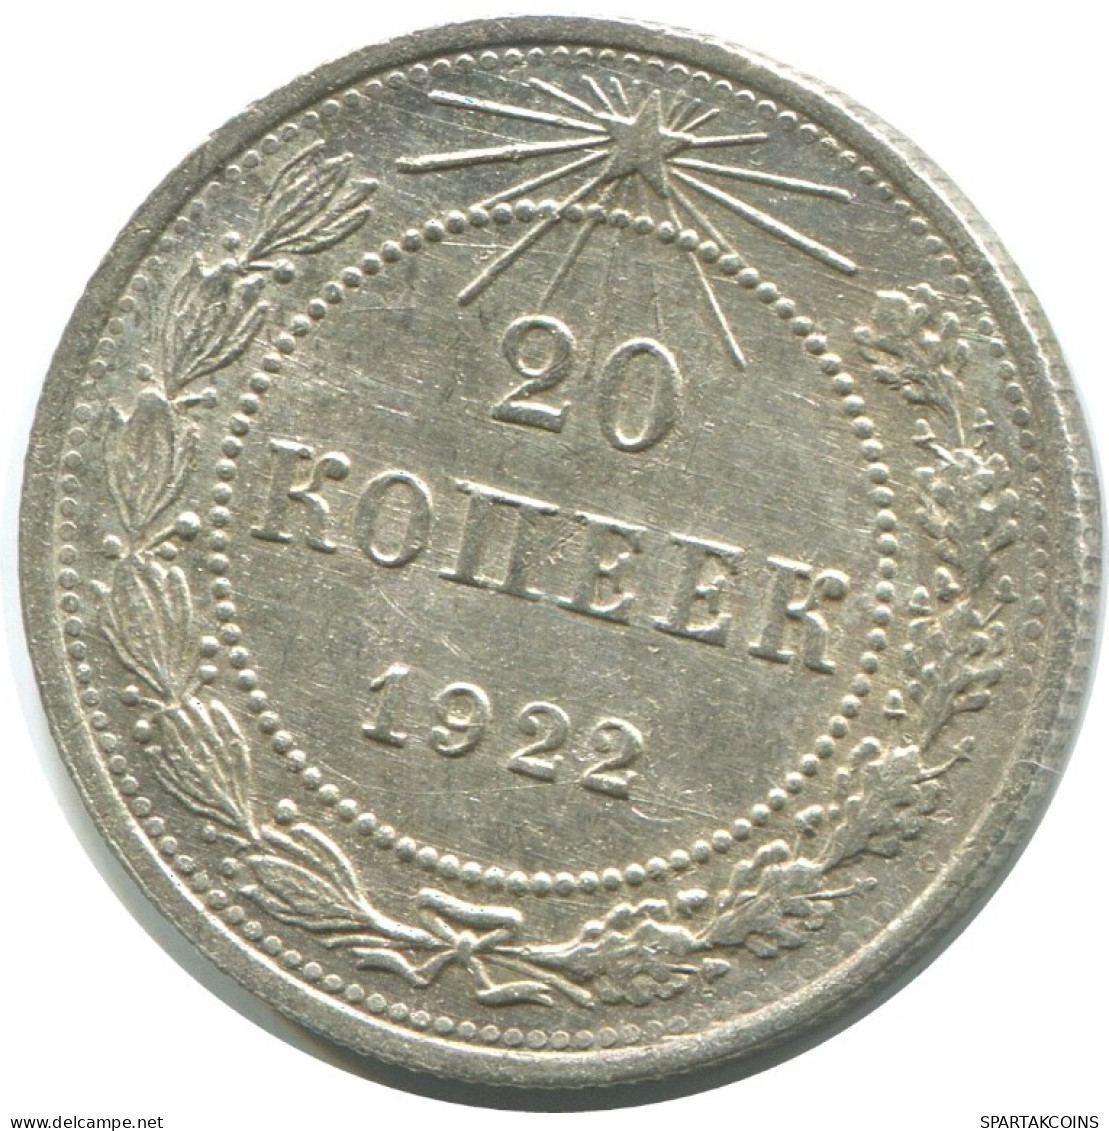 20 KOPEKS 1923 RUSSIA RSFSR SILVER Coin HIGH GRADE #AF407.4.U.A - Russie